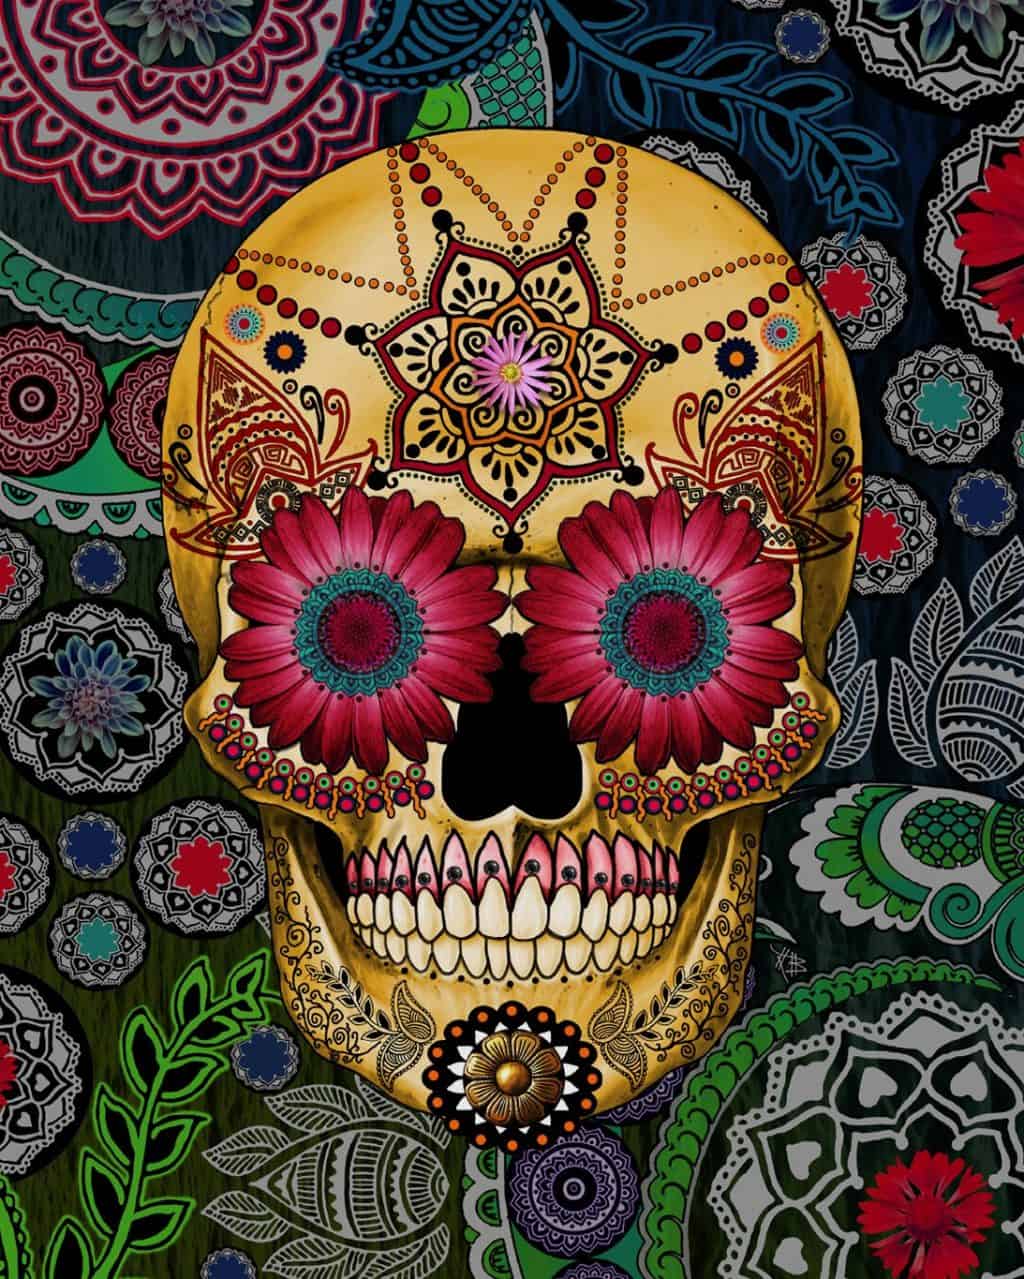 70+ Beautiful Sugar Skull Tattoos Origins, Meanings & Symbolism